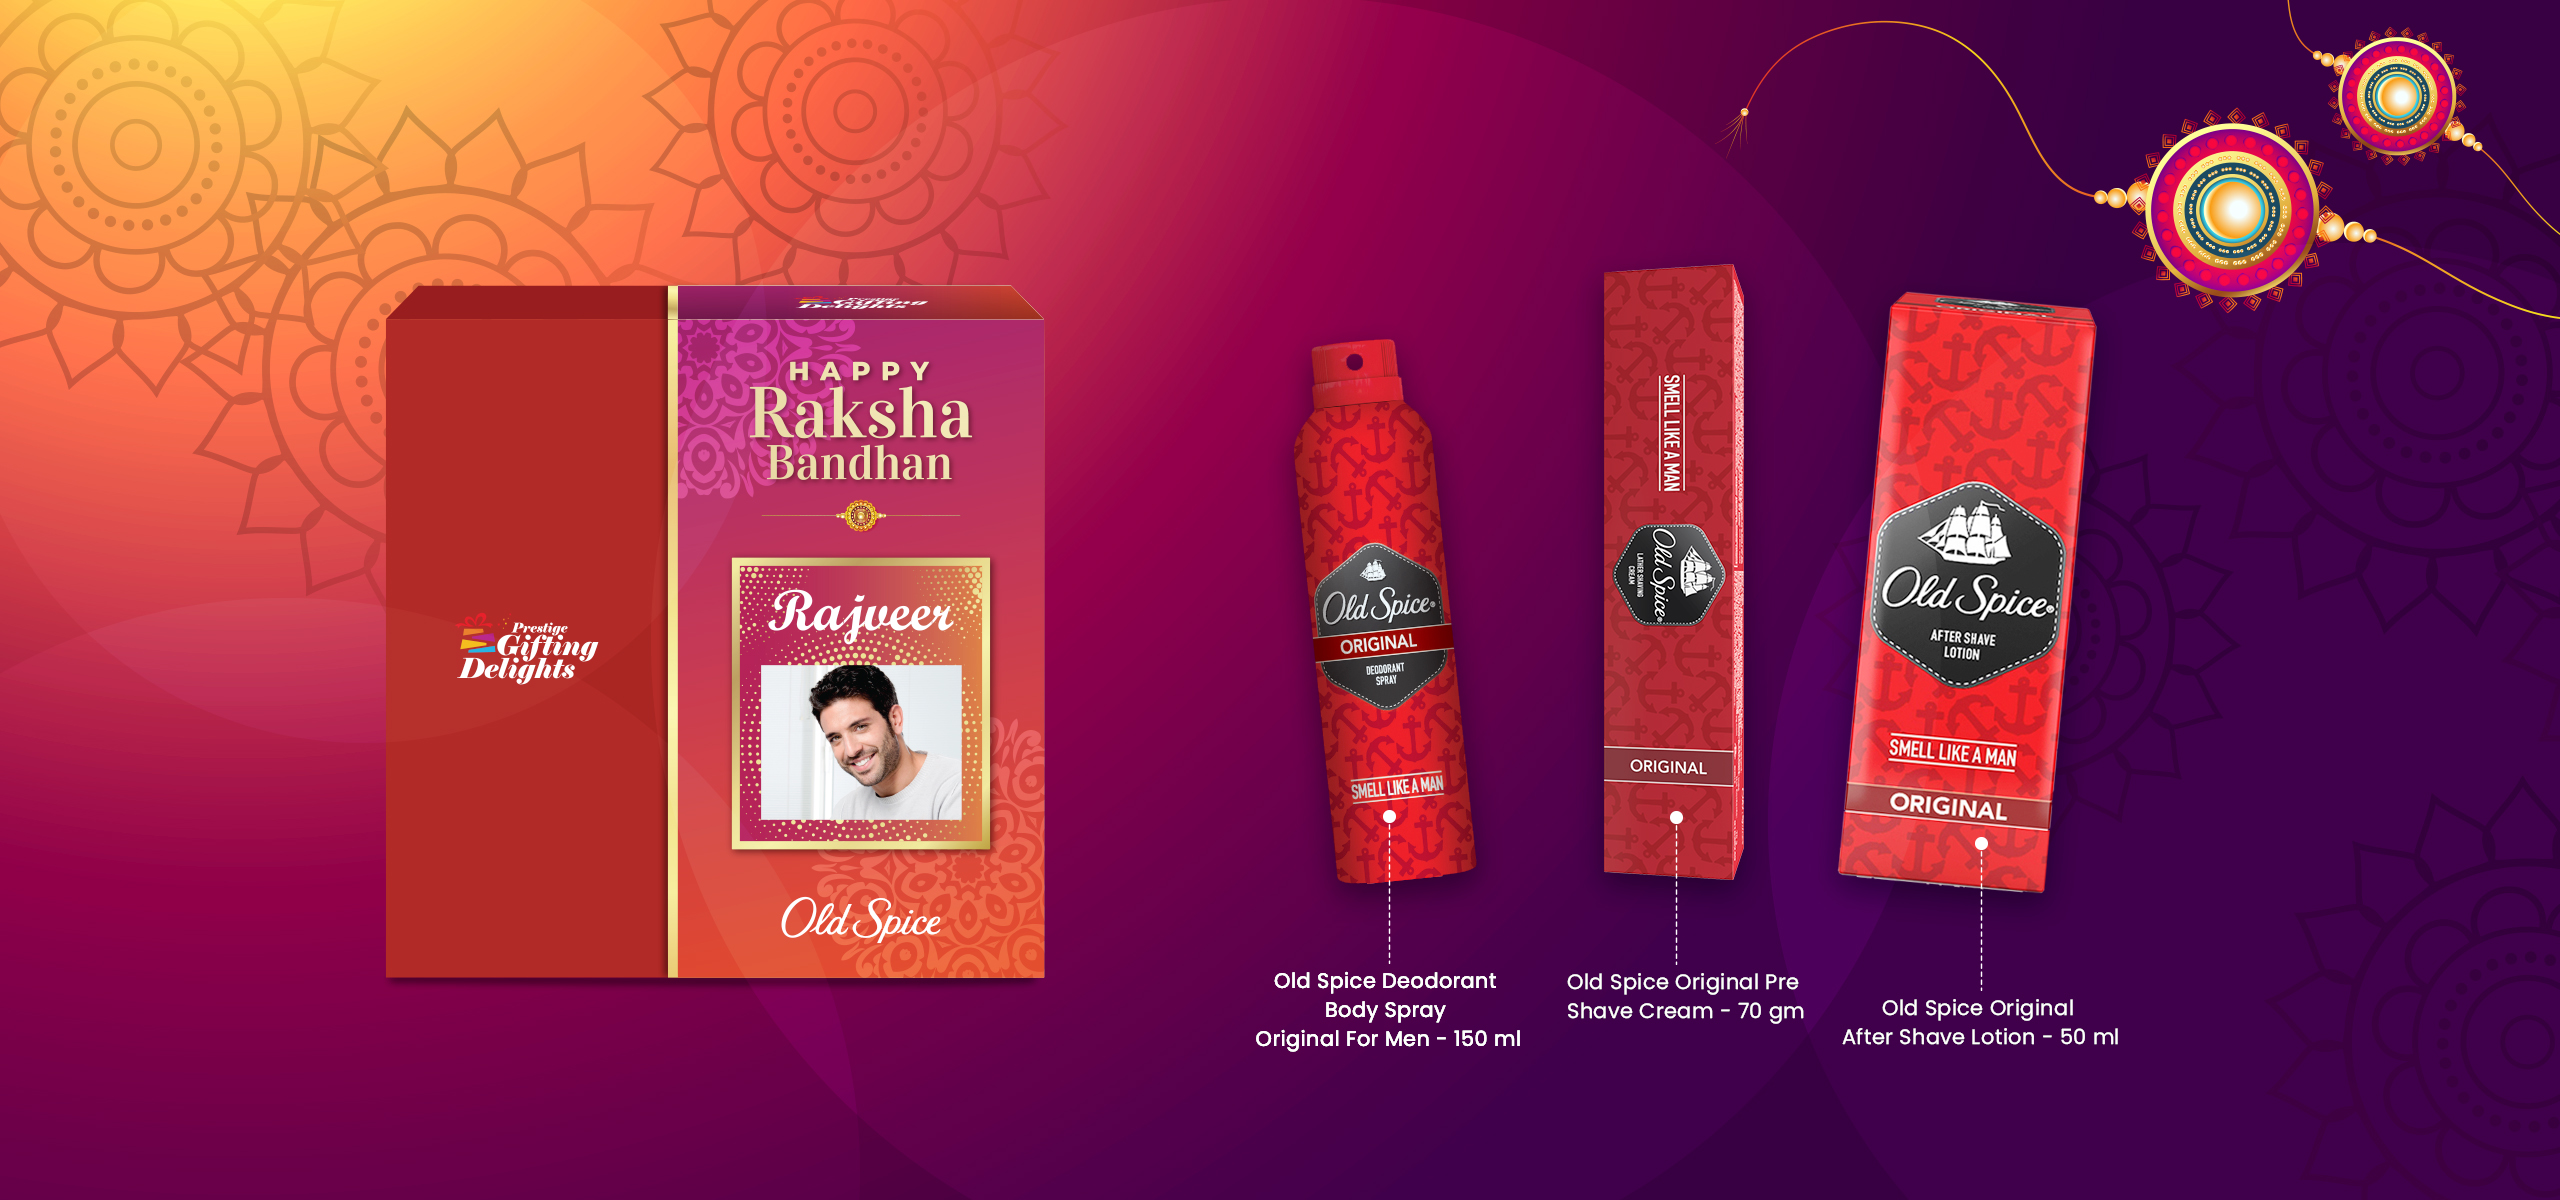 Old Spice Original Perfume Personal Grooming Rakhi Gift Set for Men